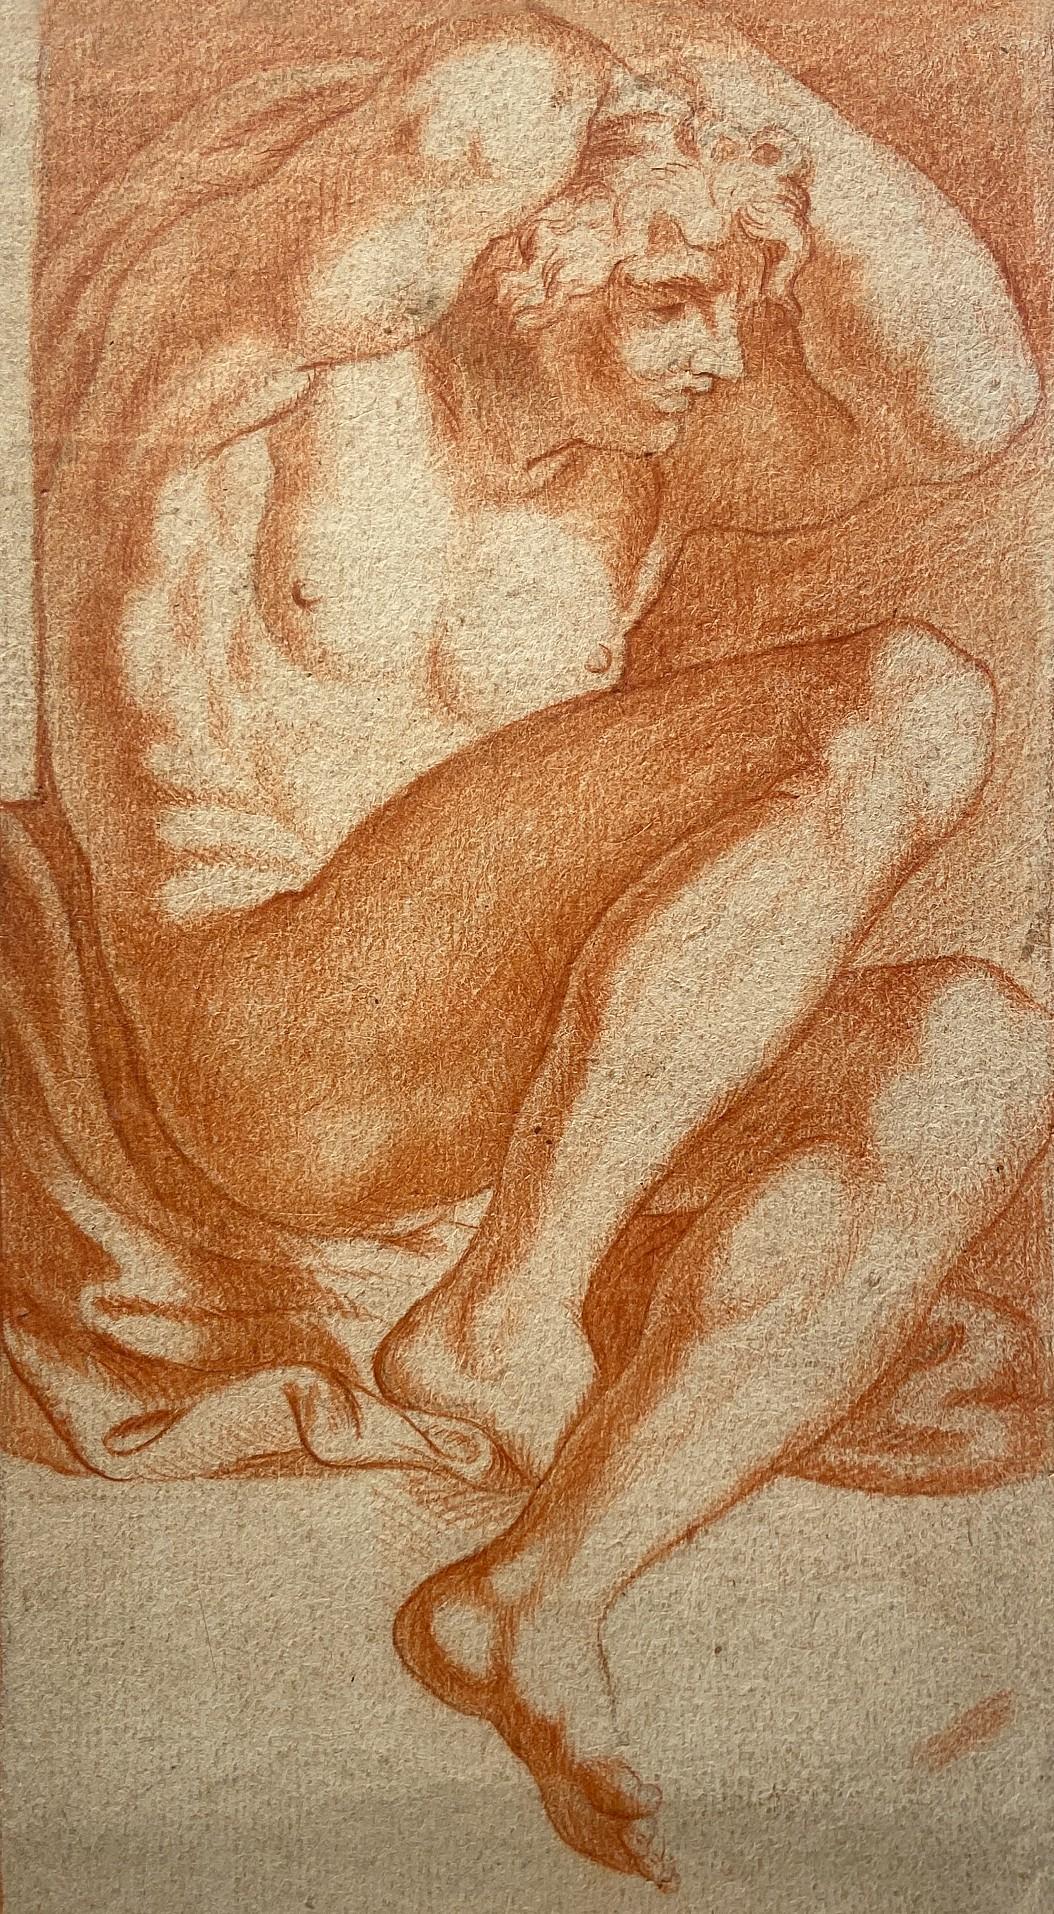 Annibale Carracci Nude – The Captive, Studie eines nackten Jungen, Rötelstudie, Carracci Gallery